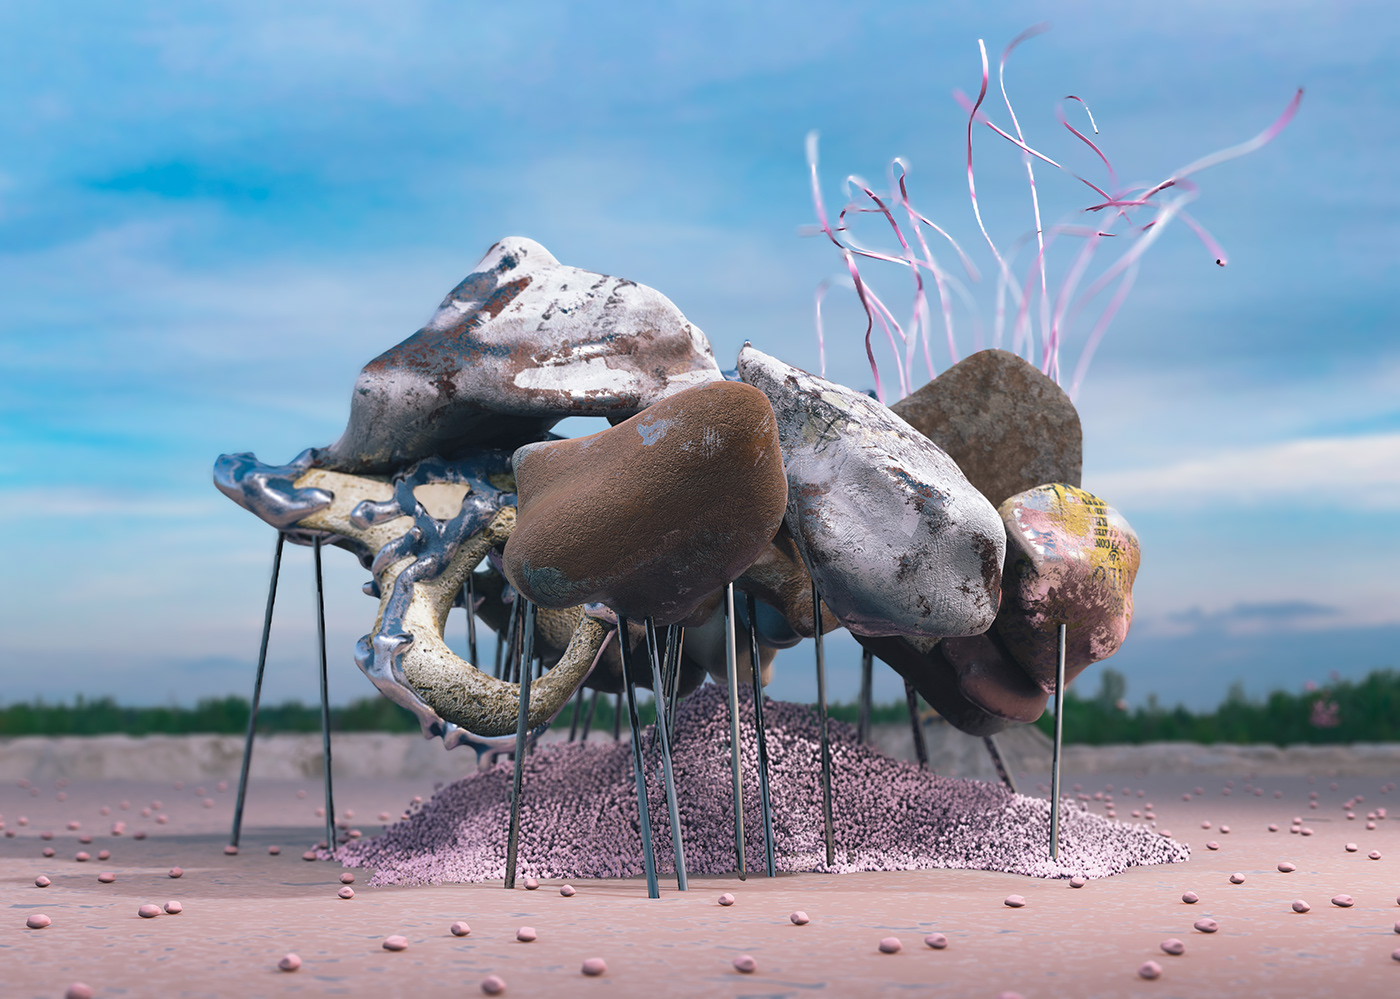 contemporaryart digitalart Nature CGI organic art abstract Sustainability environment